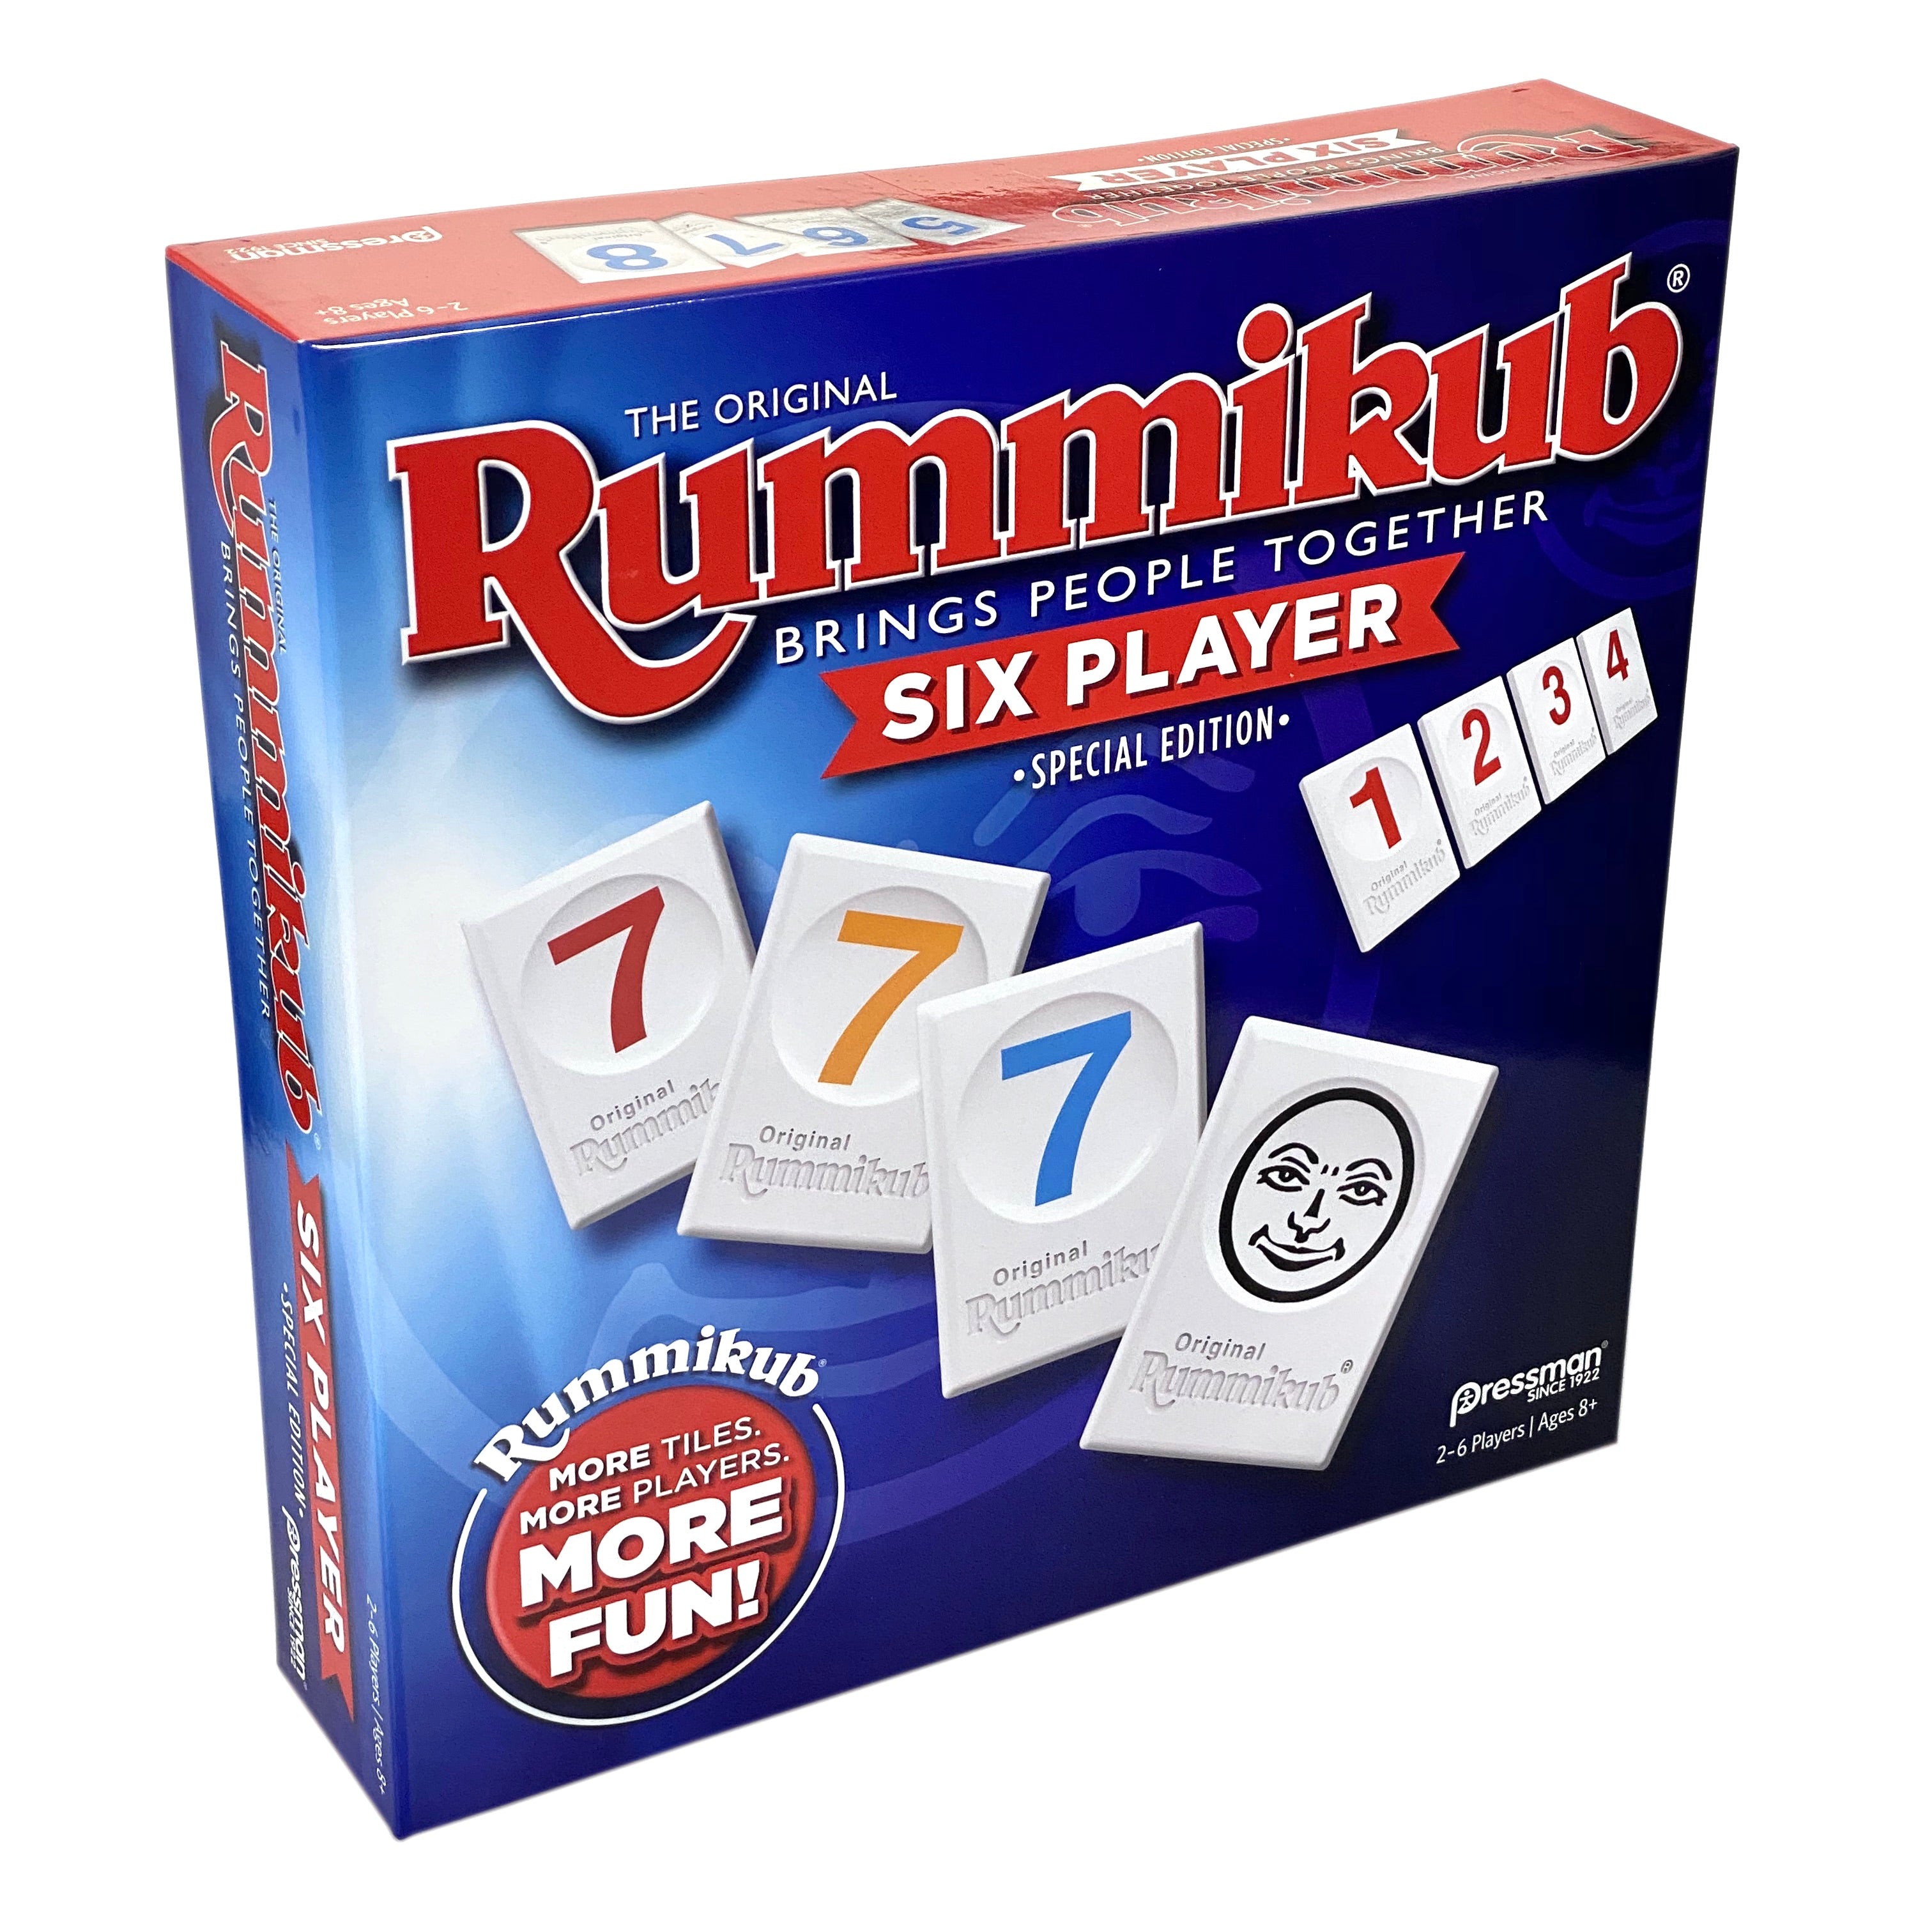 Rummikub 6 Player Edition    